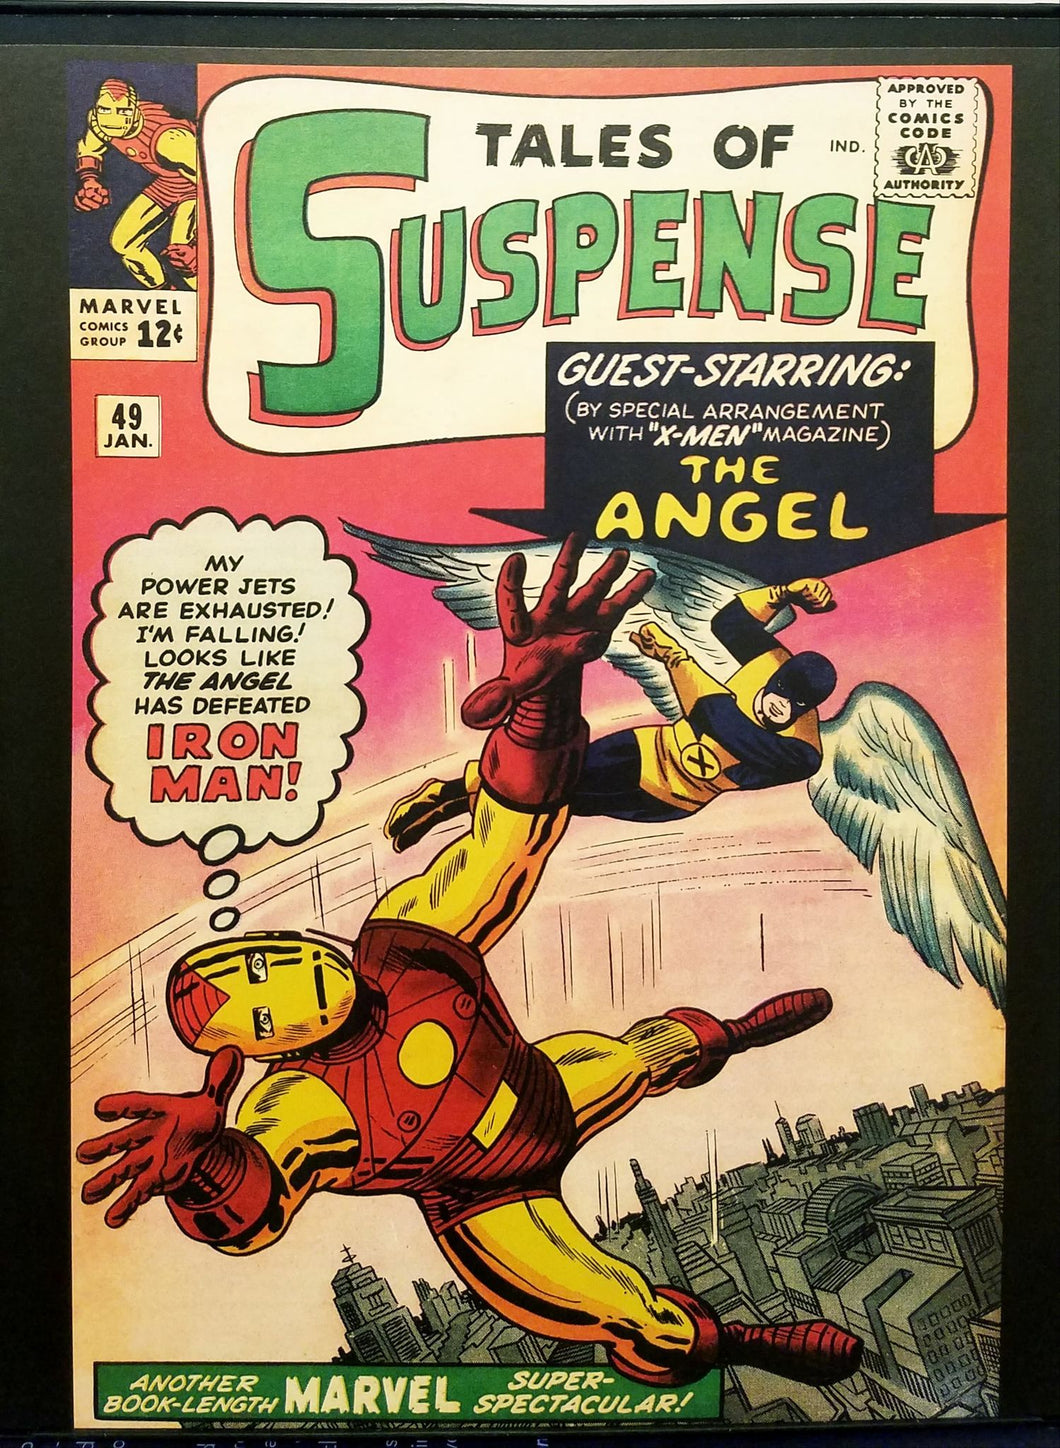 Tales of Suspense #49 w/ Iron Man 11x14 FRAMED Art Print, Vintage Marvel Comics